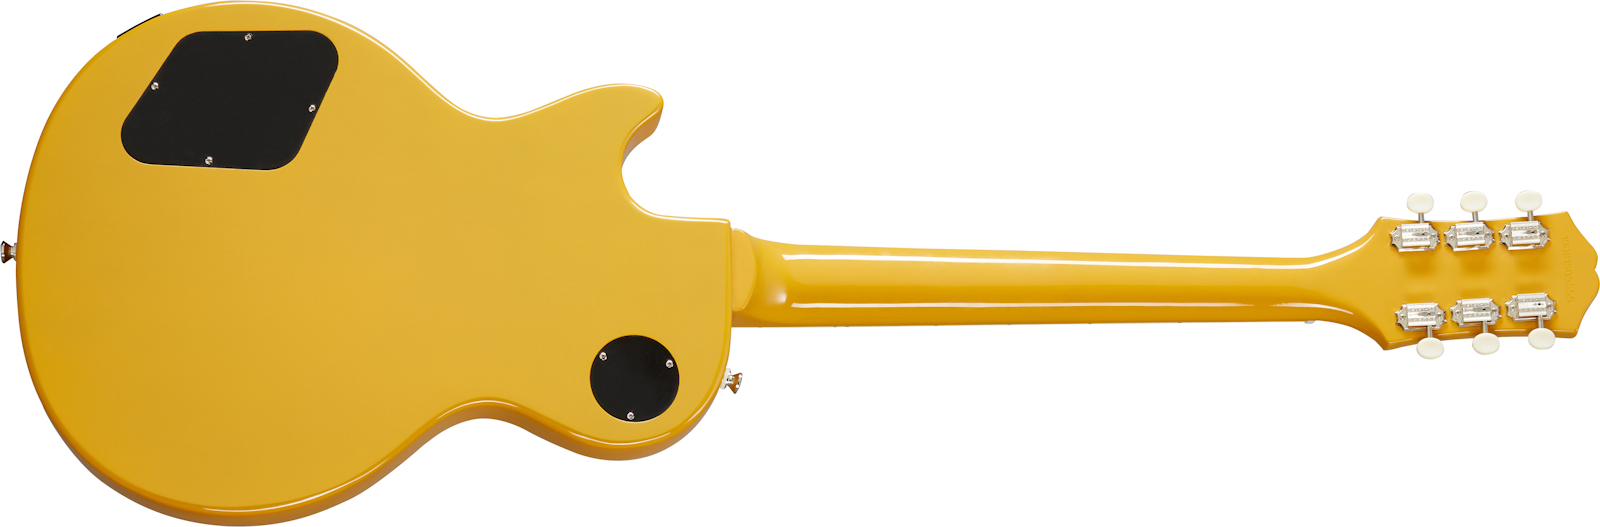 Epiphone Les Paul Special Lh Original Gaucher 2s P90 Ht Lau - Tv Yellow - E-Gitarre für Linkshänder - Variation 1